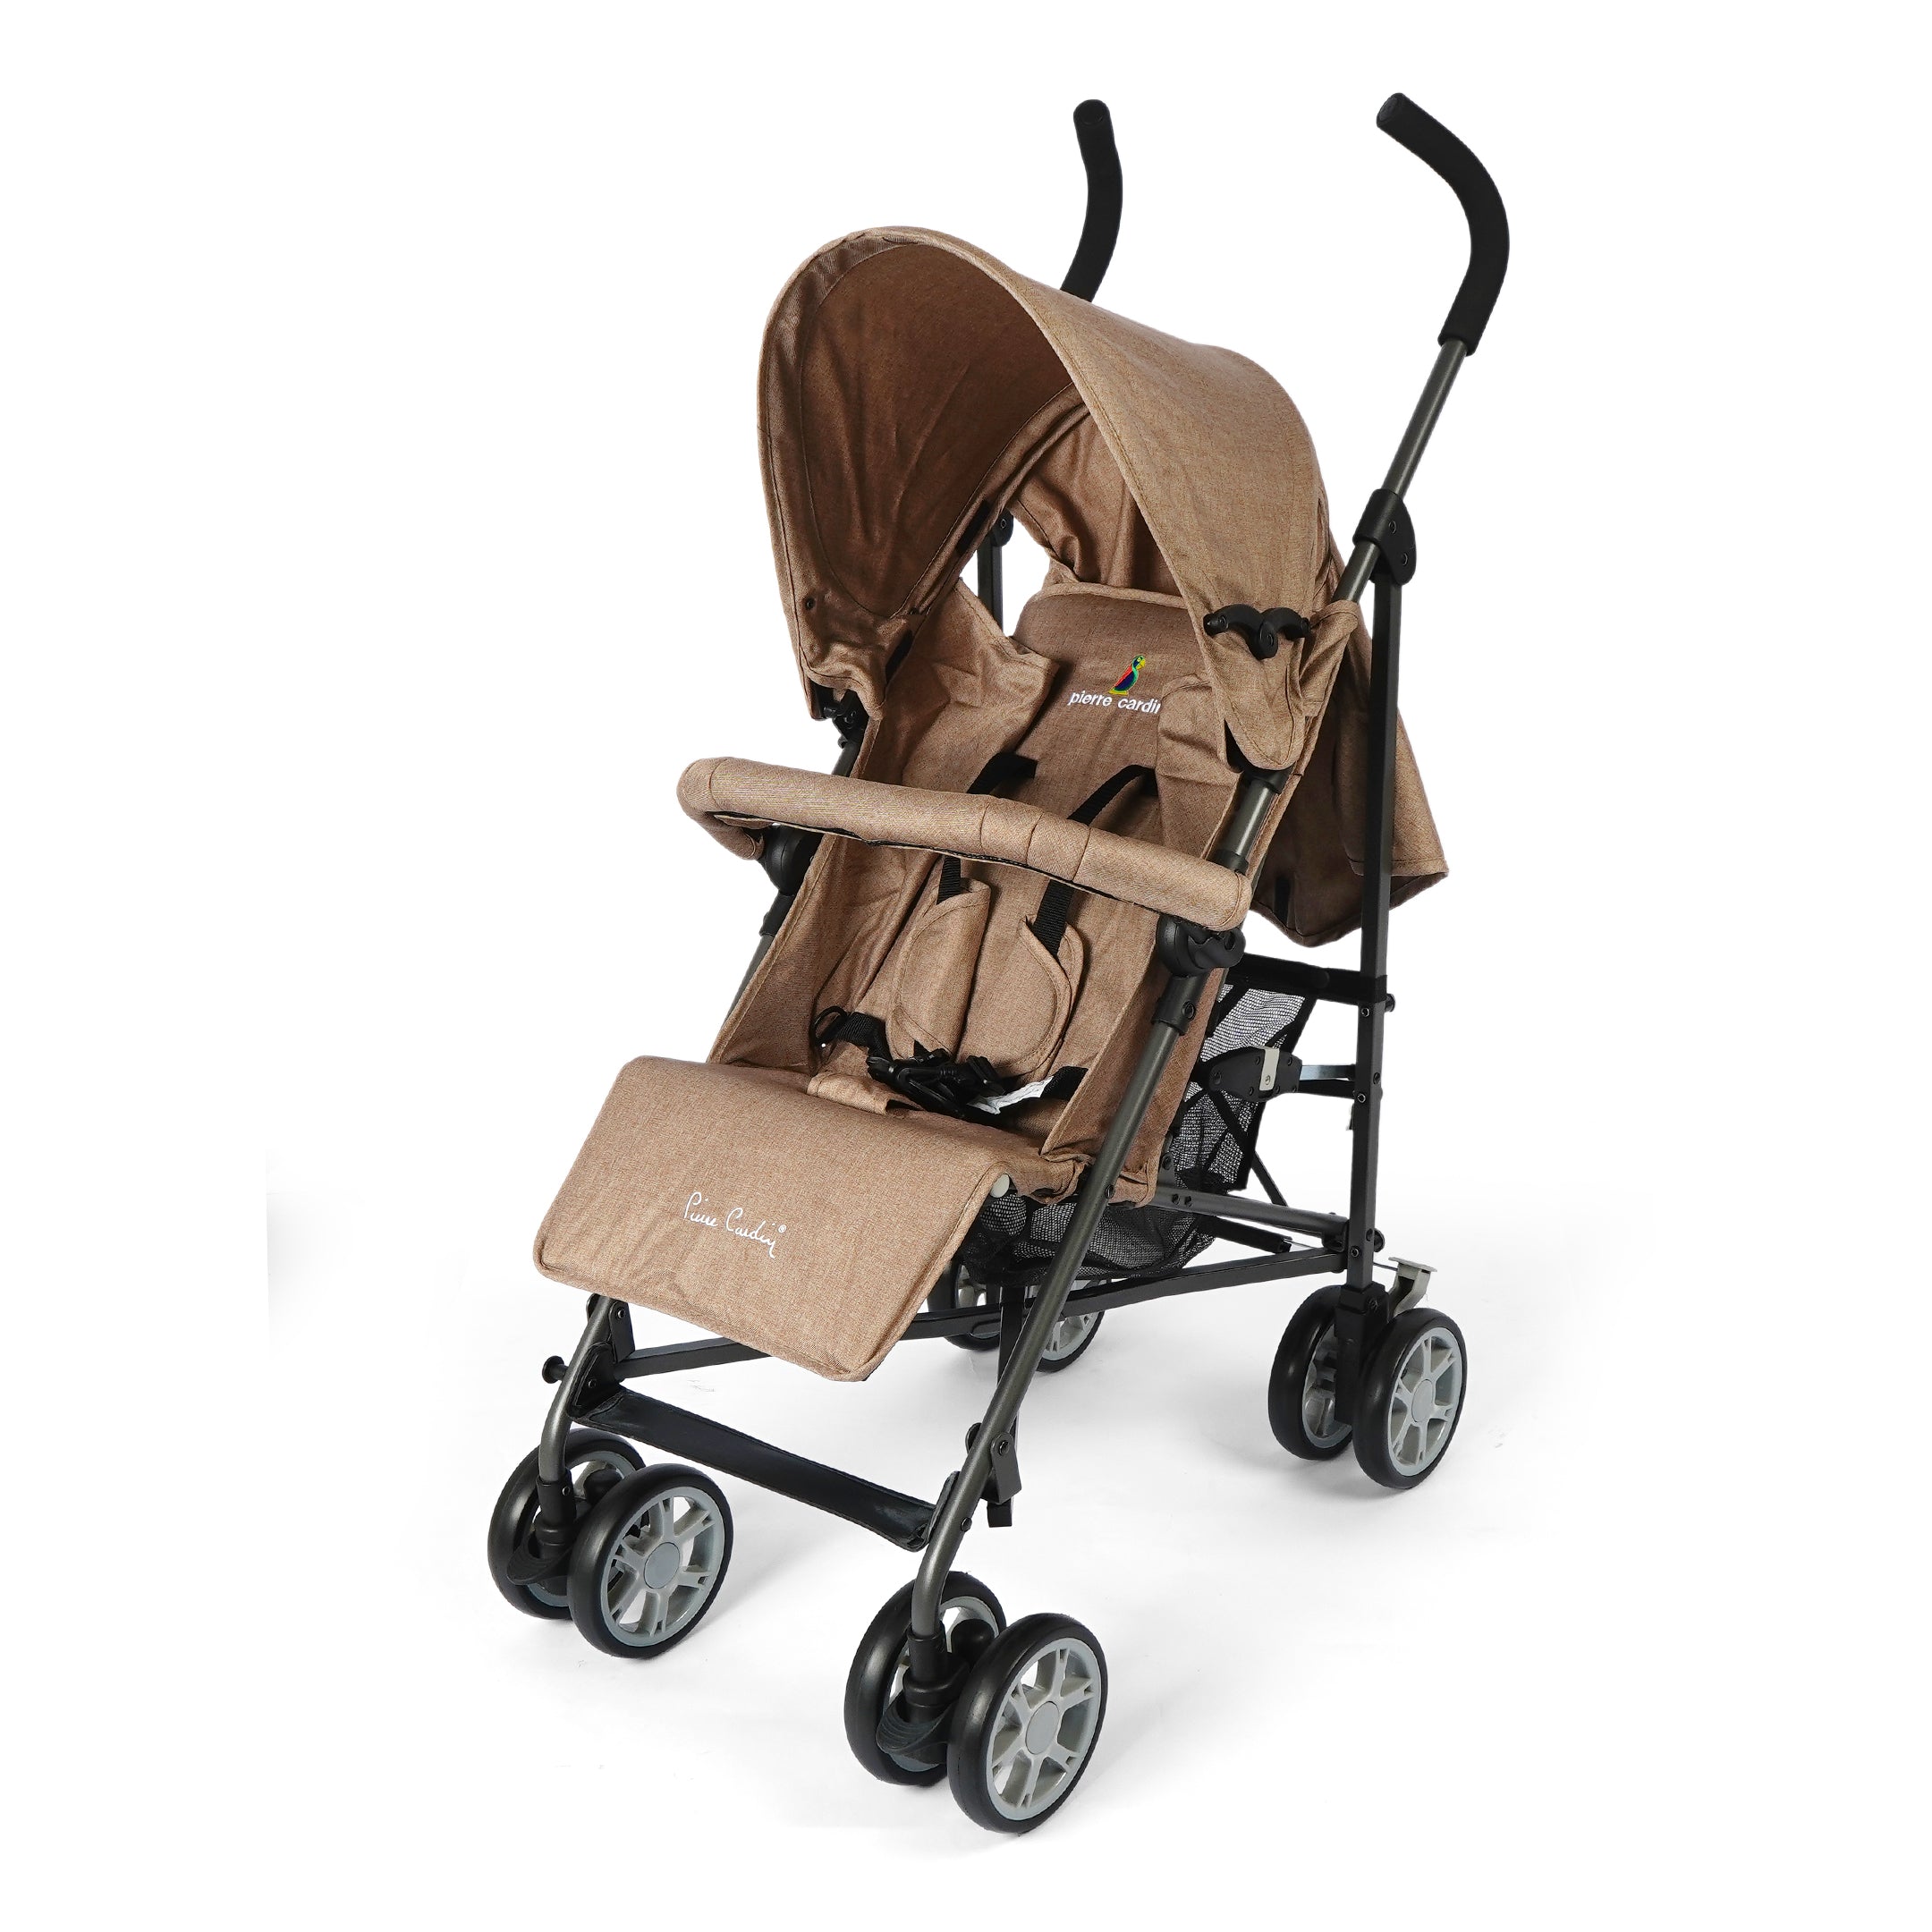 Pierre Cardin Baby Stroller - Brown